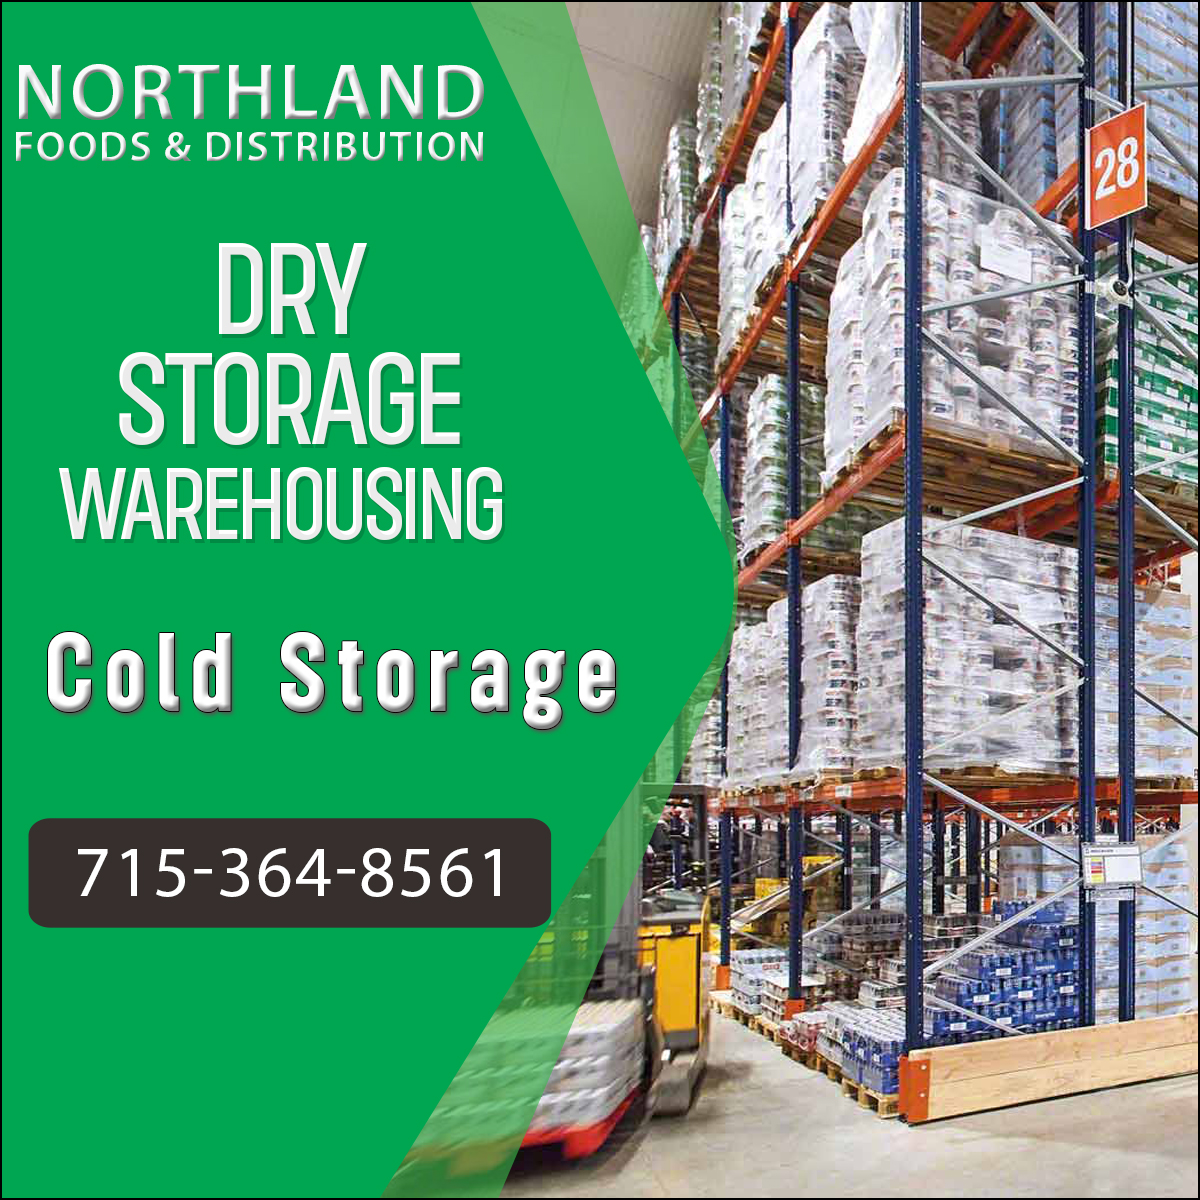 Northland Foods & Distribution